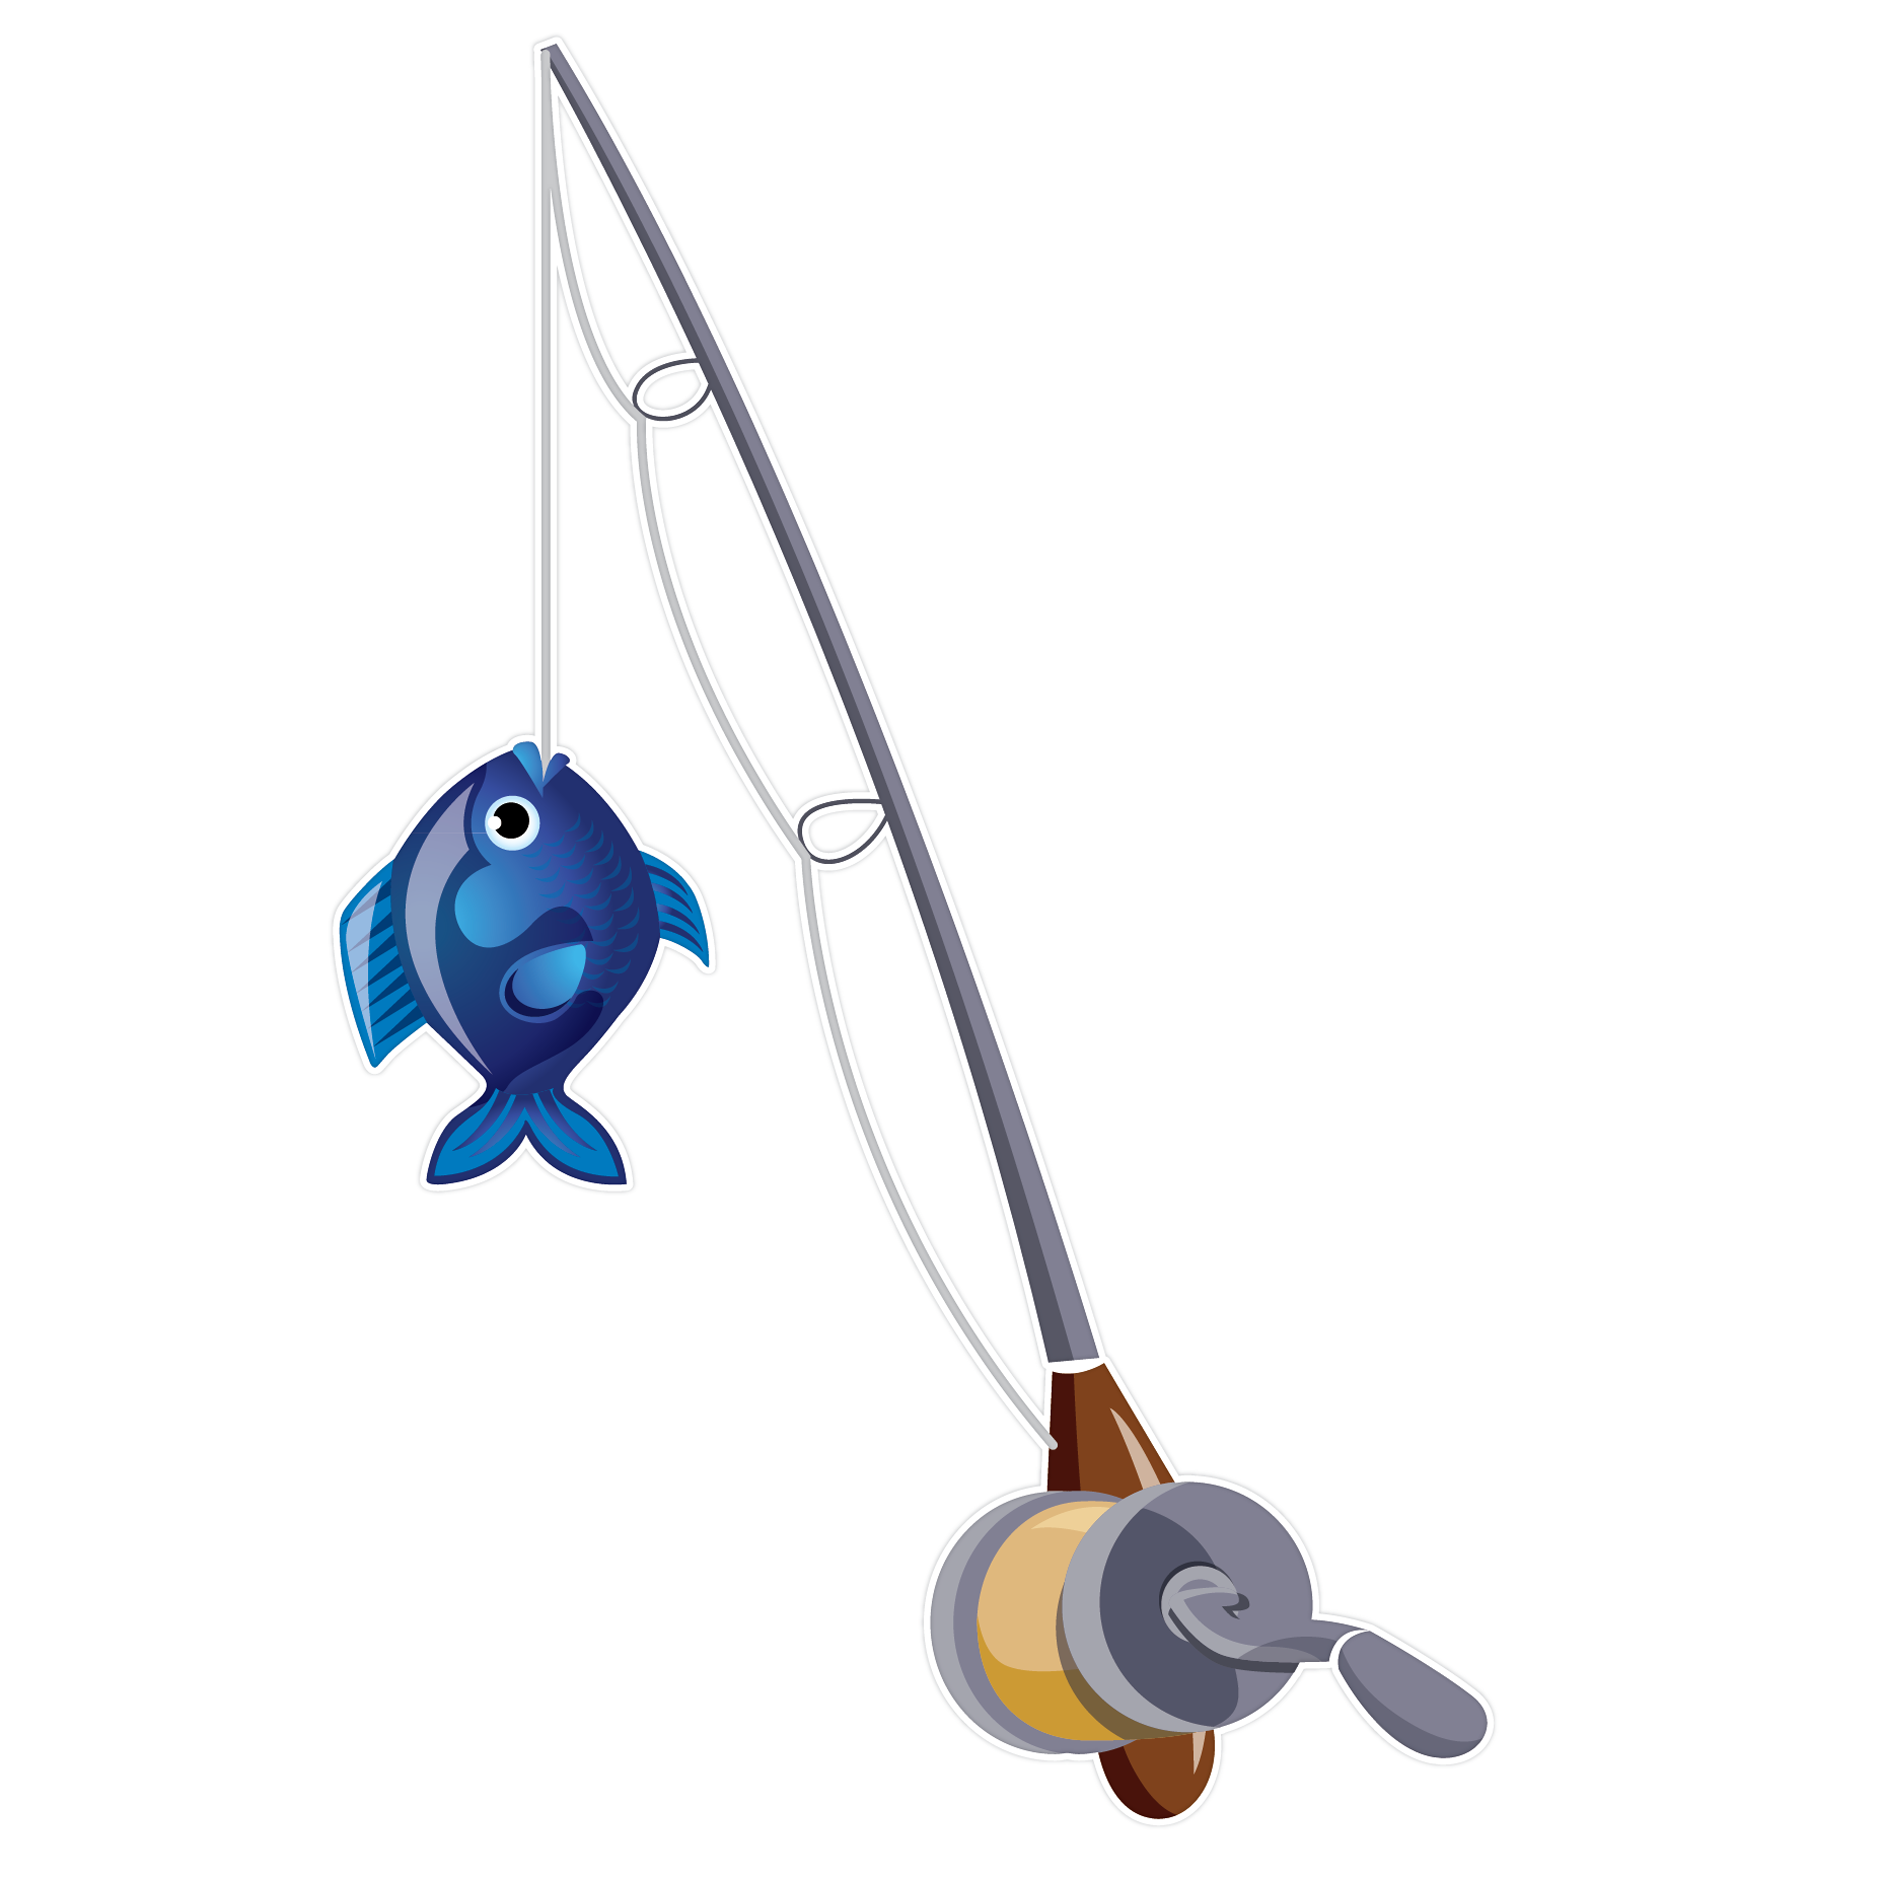 Fishing pole fishing rod clip